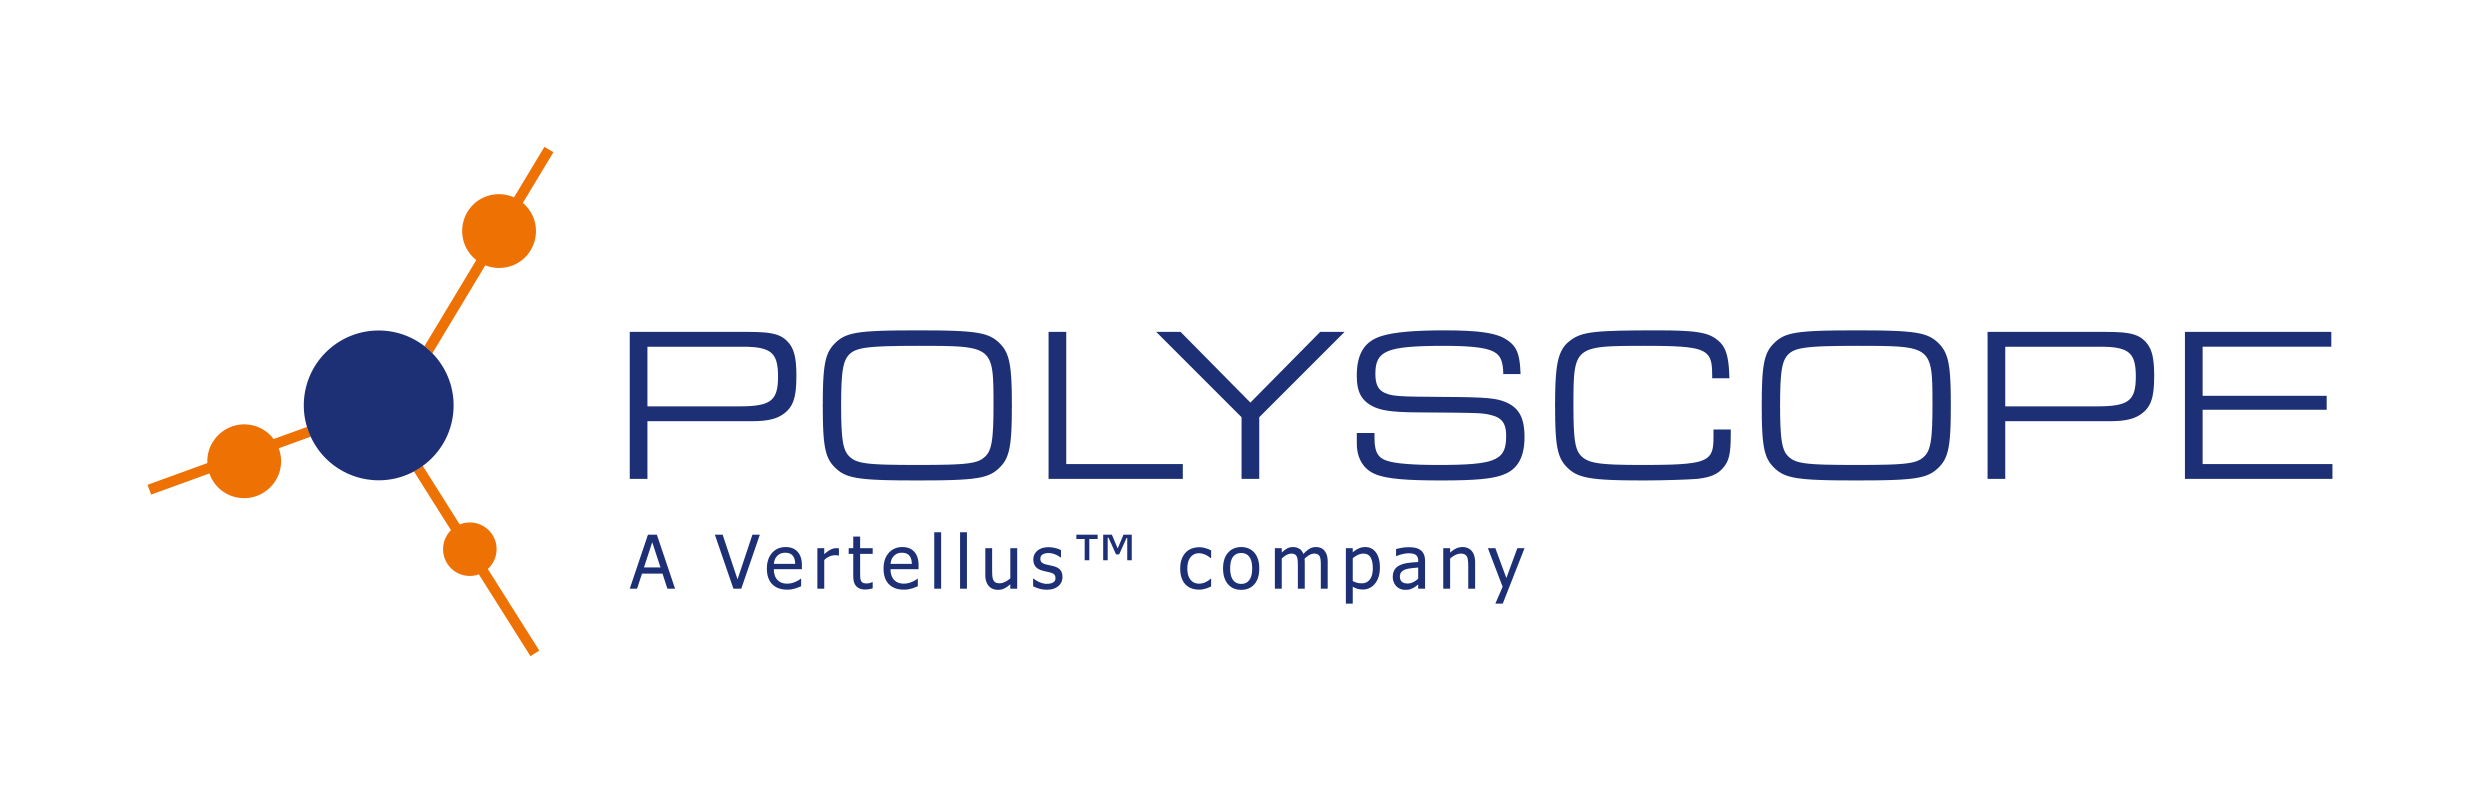 Polyscope logo